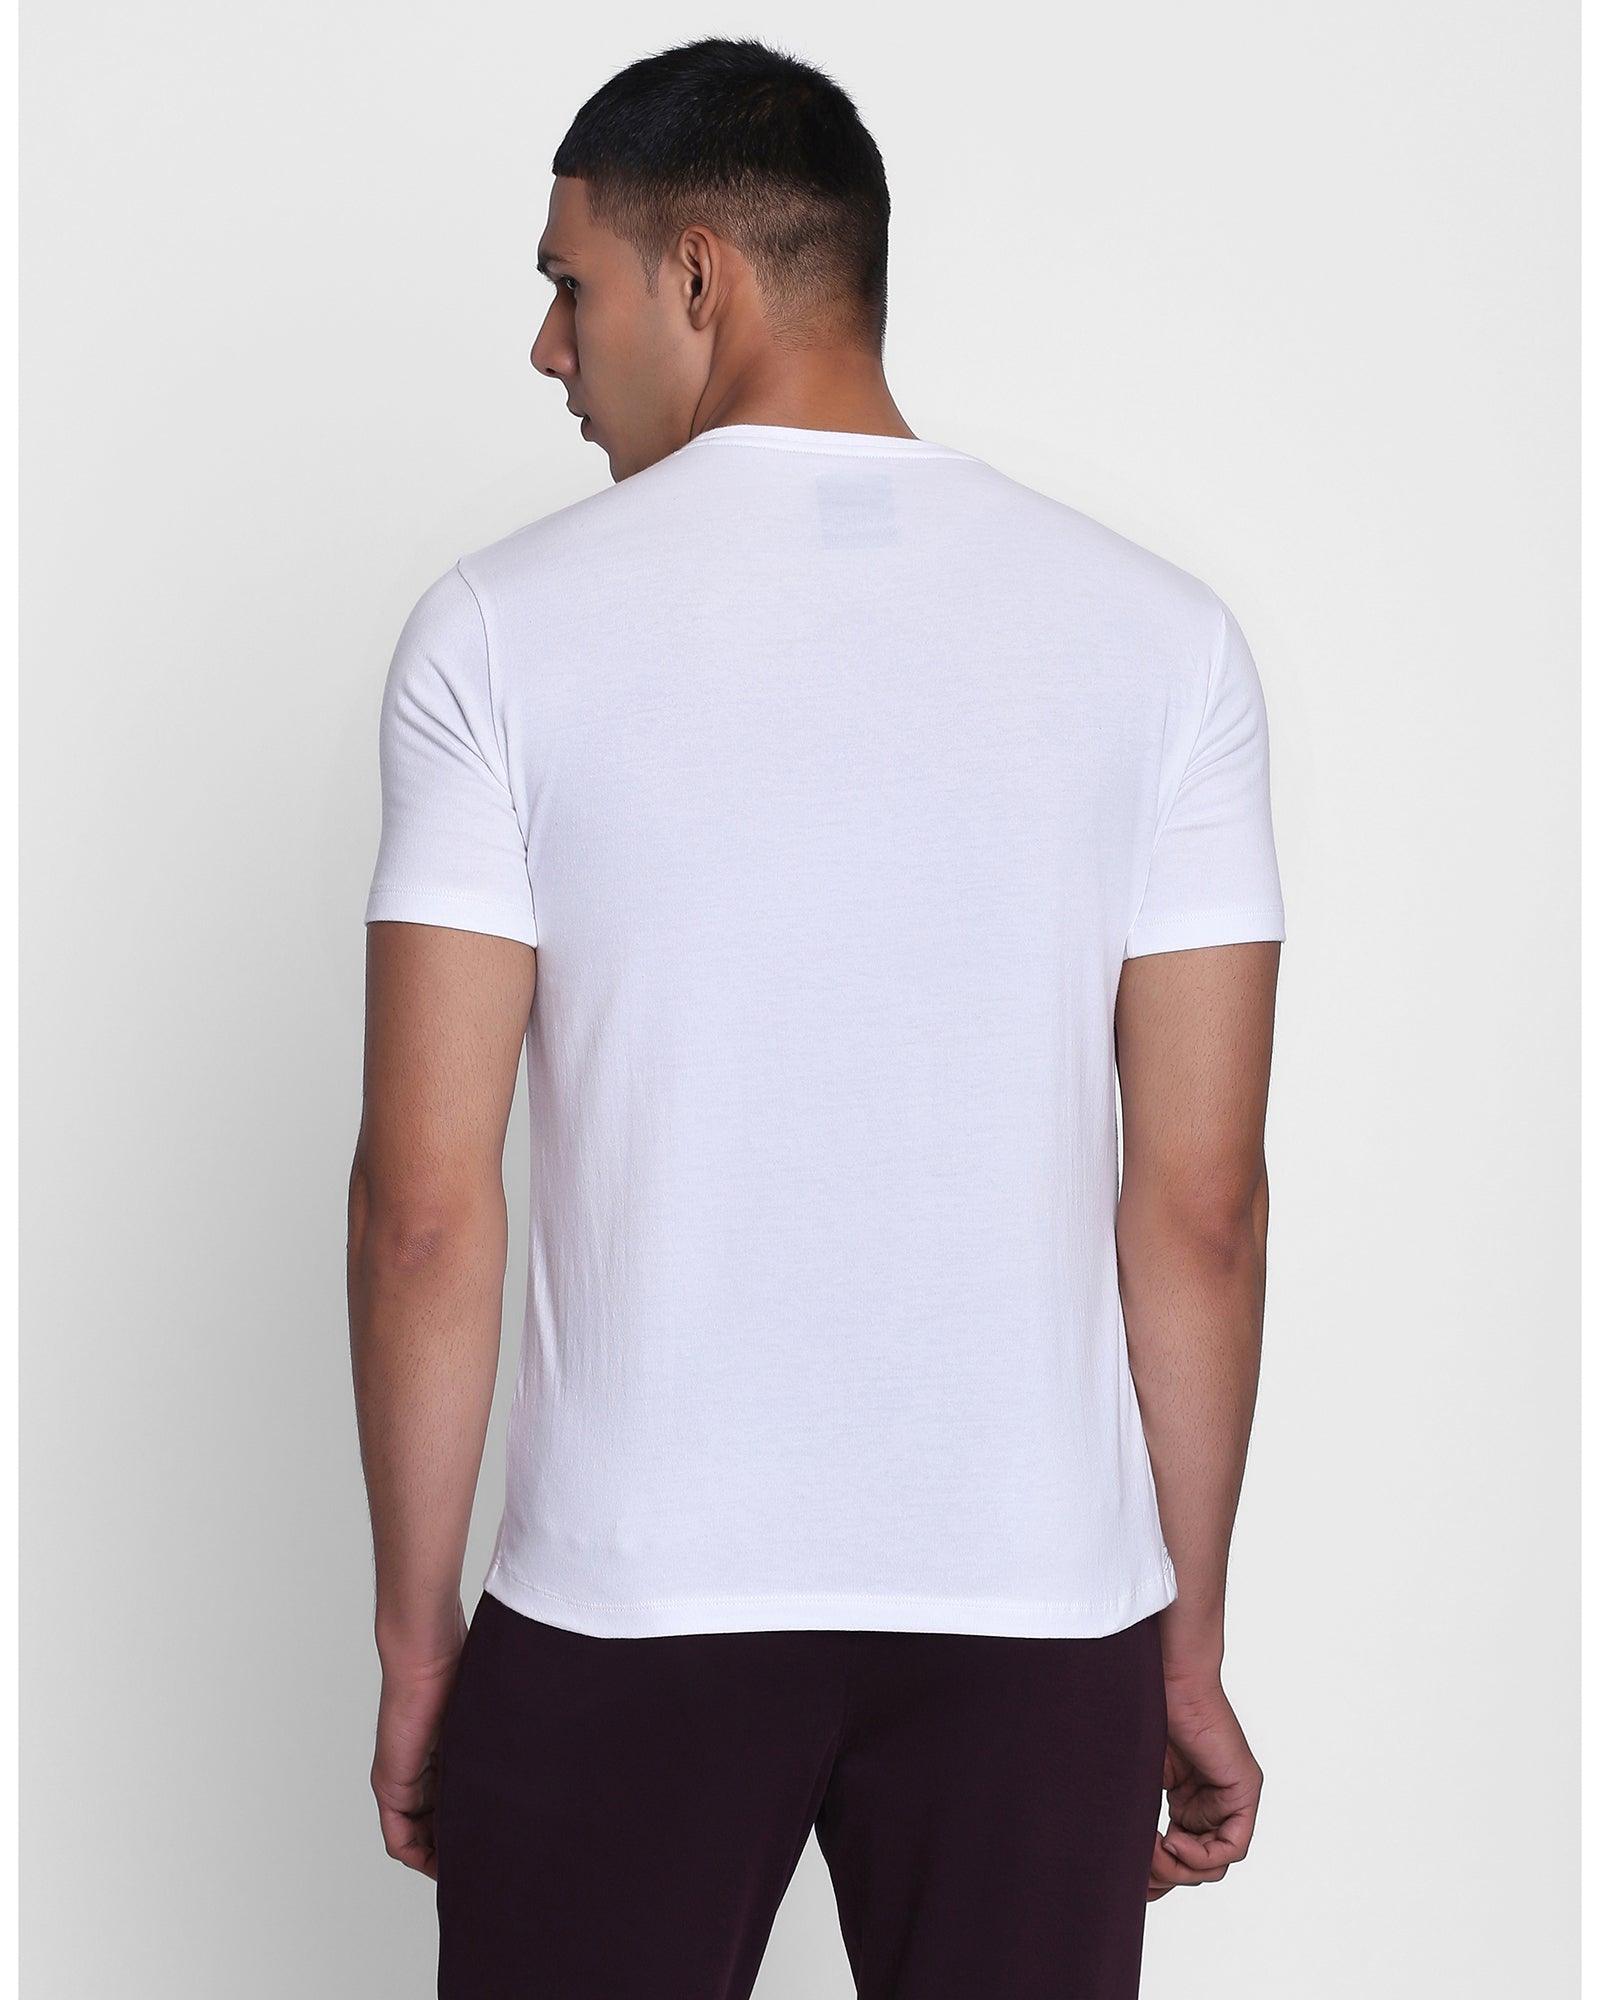 Crew Neck White Printed T Shirt - Martin